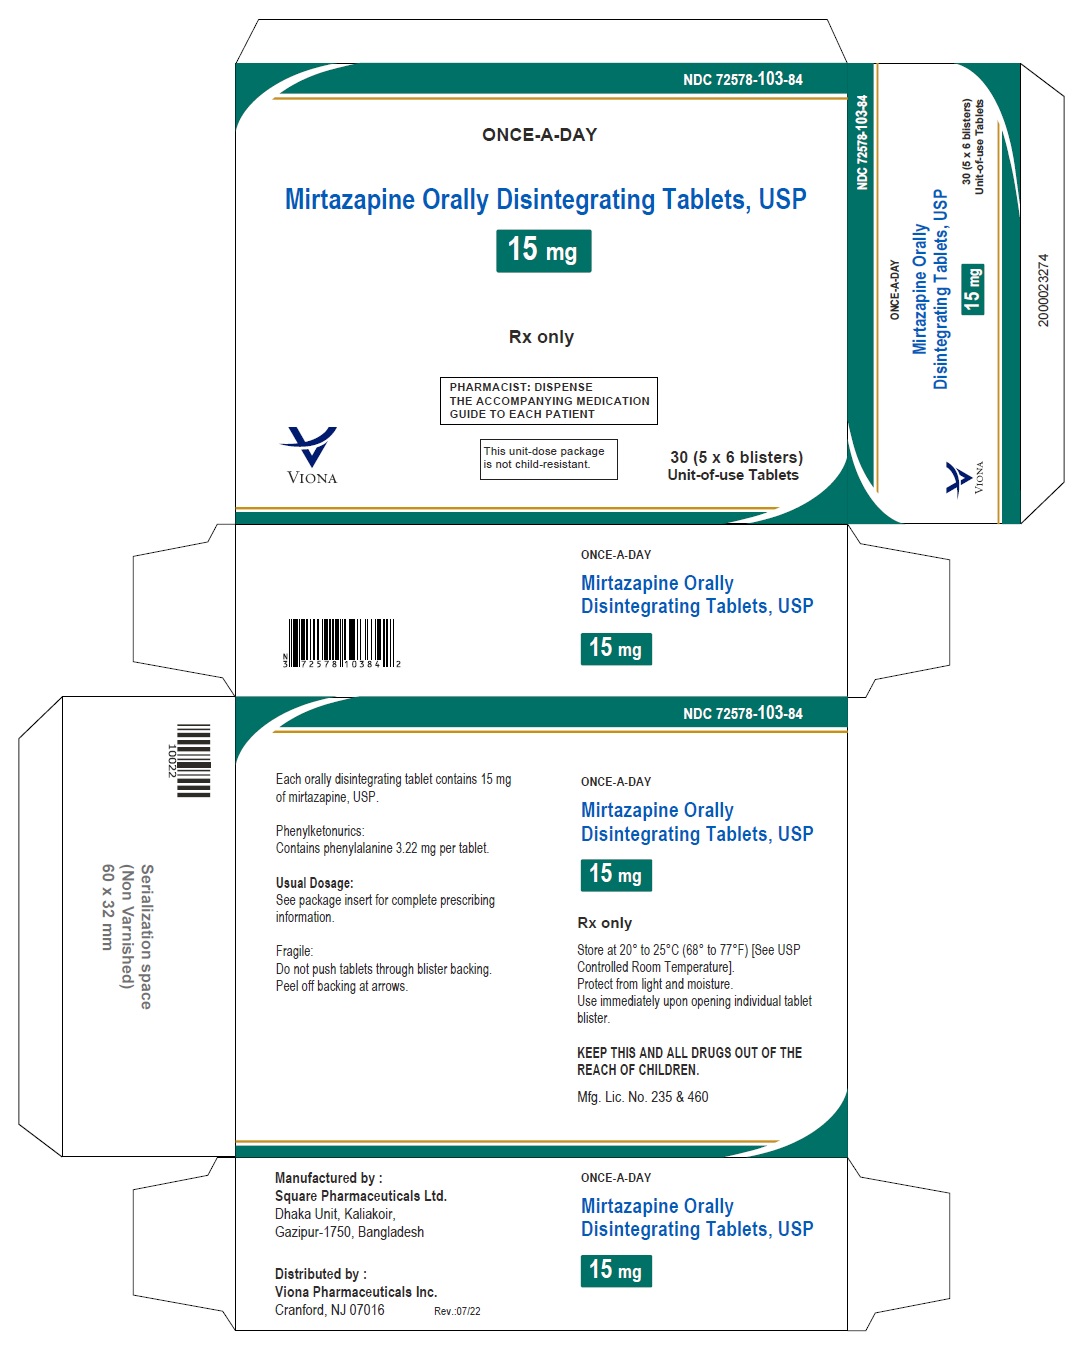 Mirtazapine orally disintegrating tablets USP, 15 mg